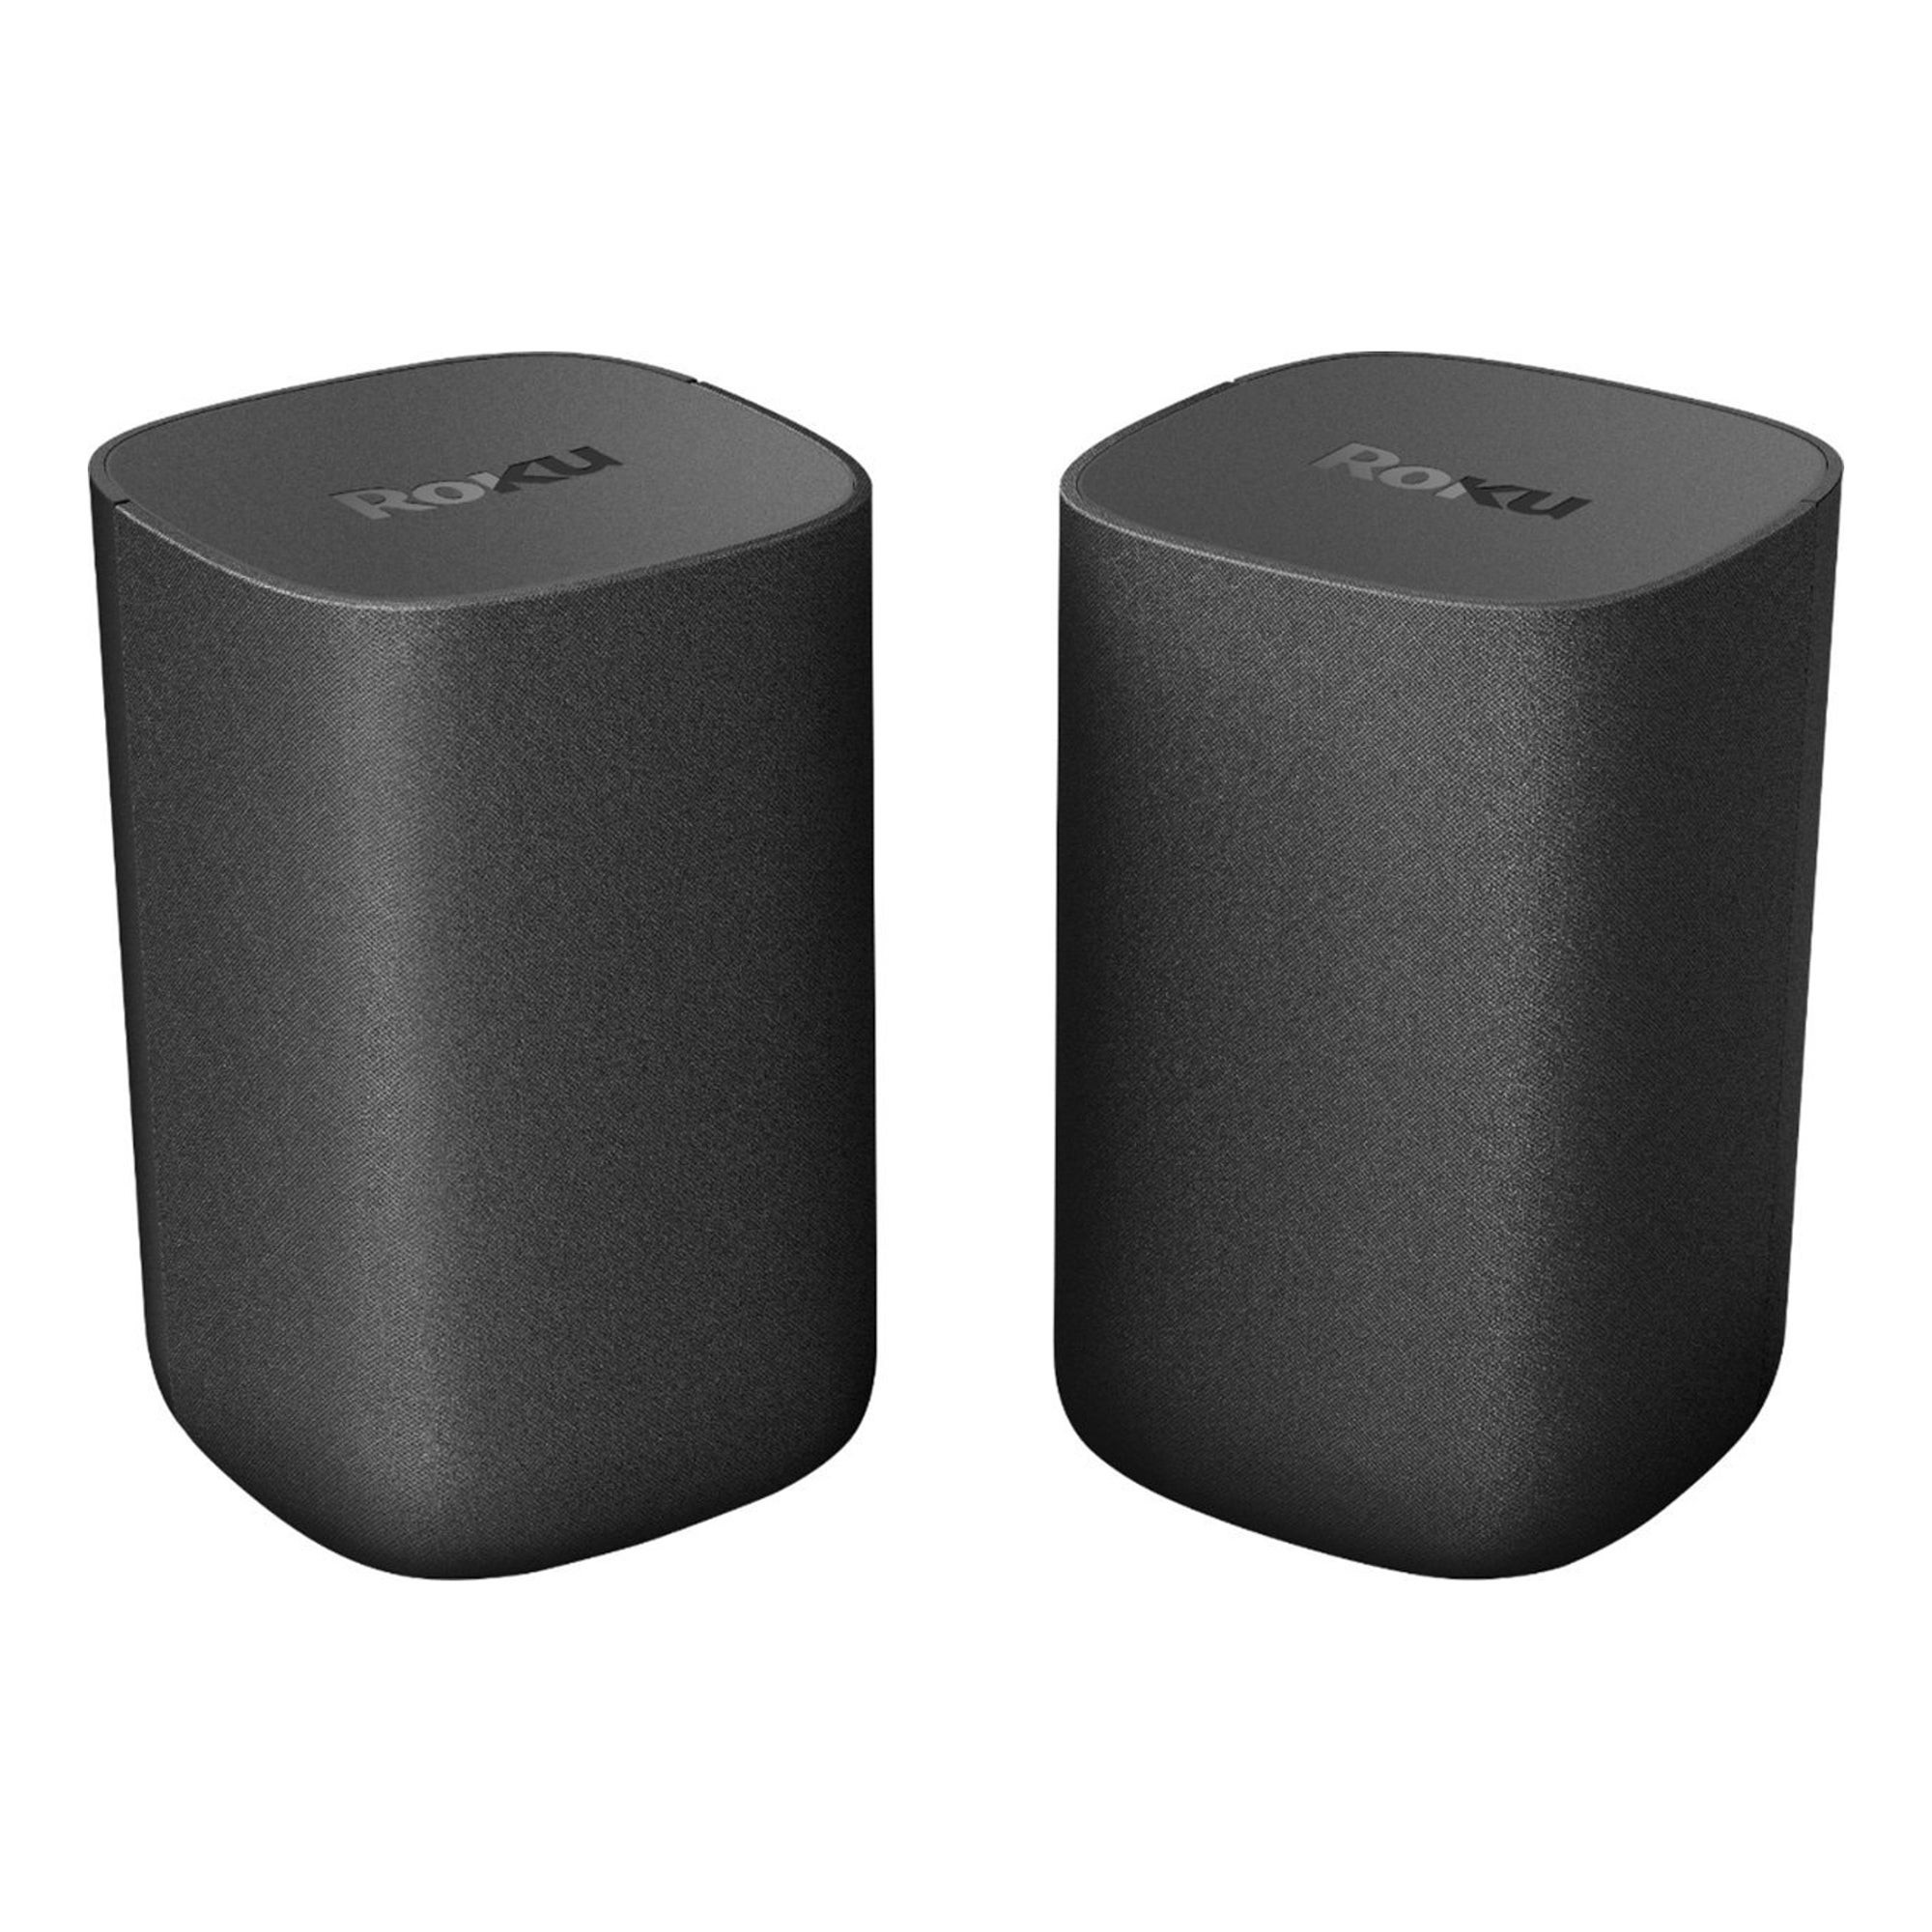 Roku Wireless Speakers